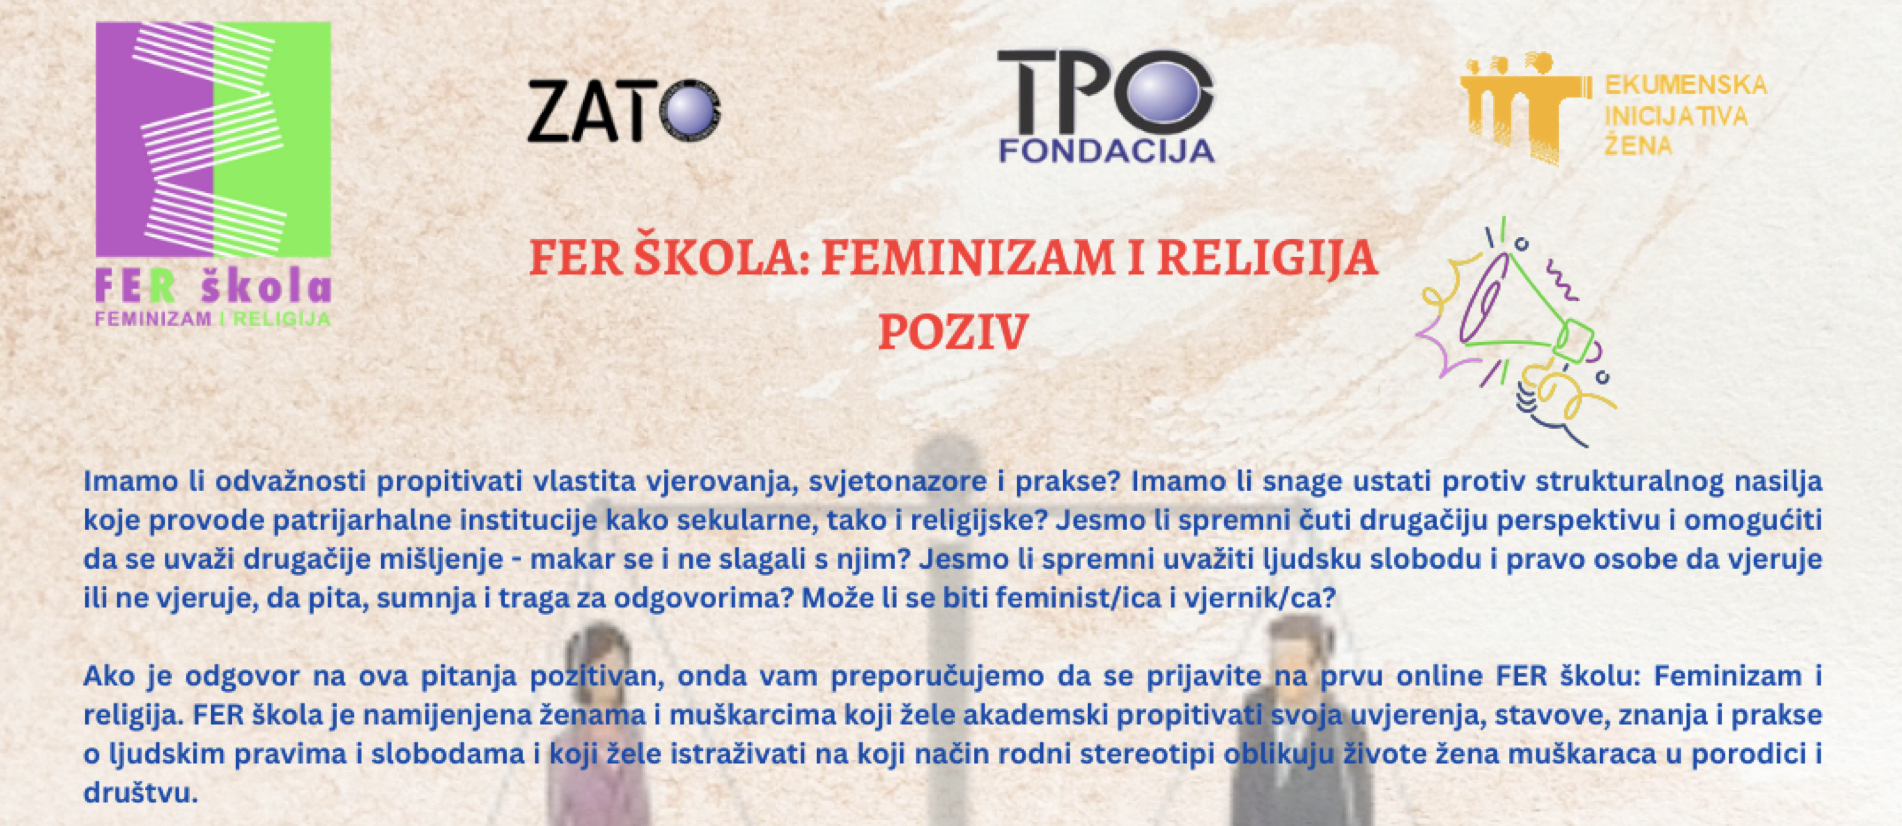 Poziv na upis u online FER školu: Feminizam i religija